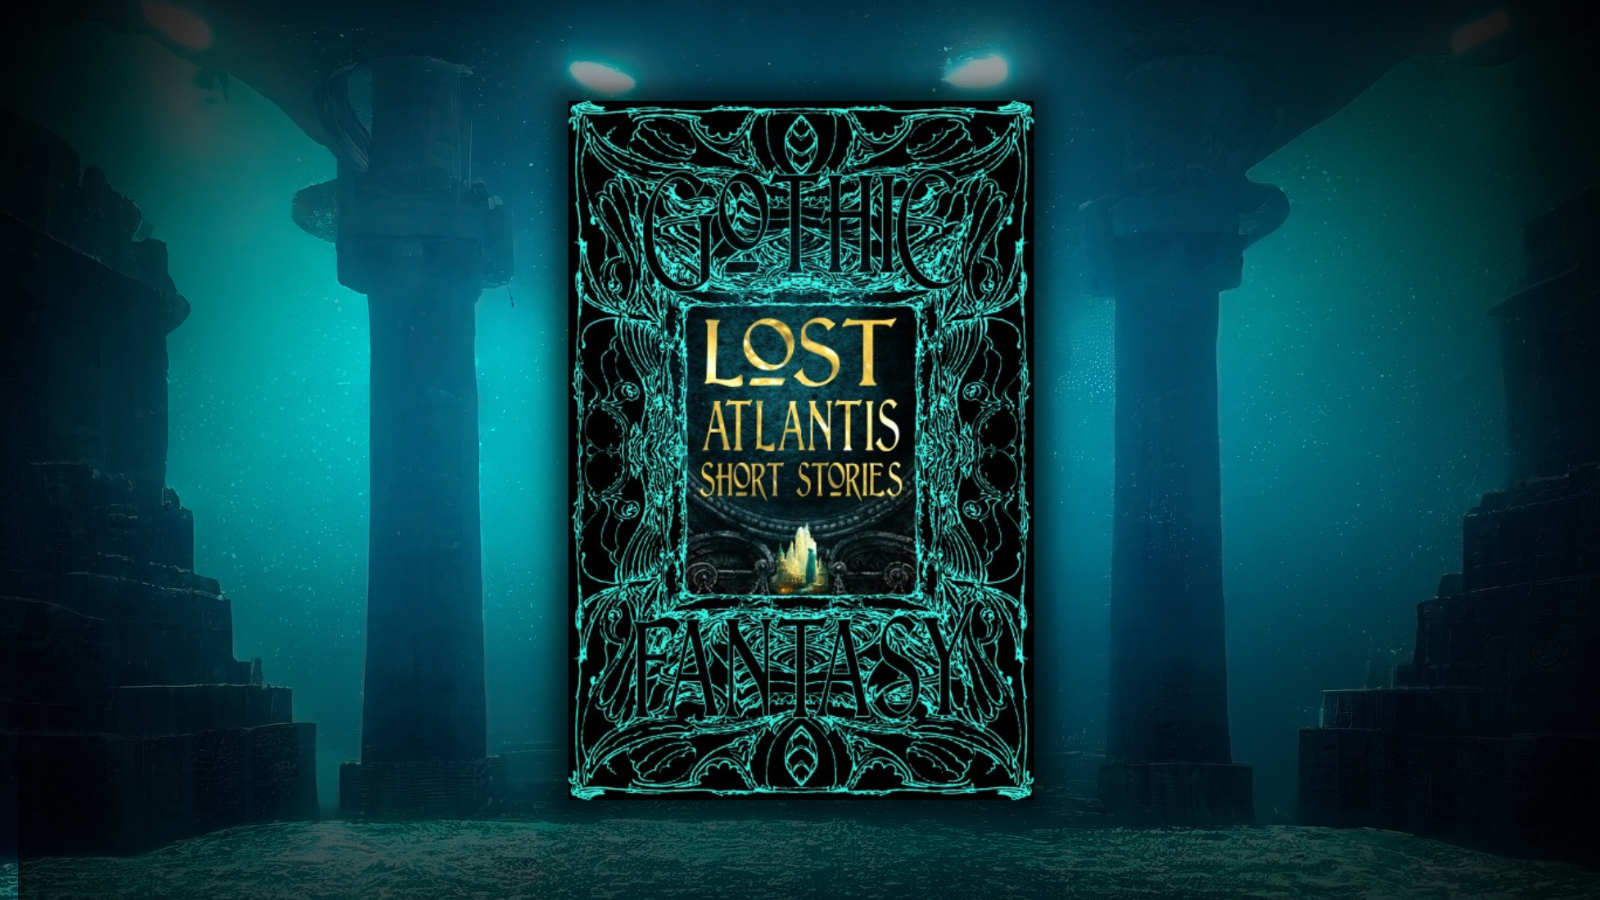 Lost atlantis short stories gothic fantasy flame tree 